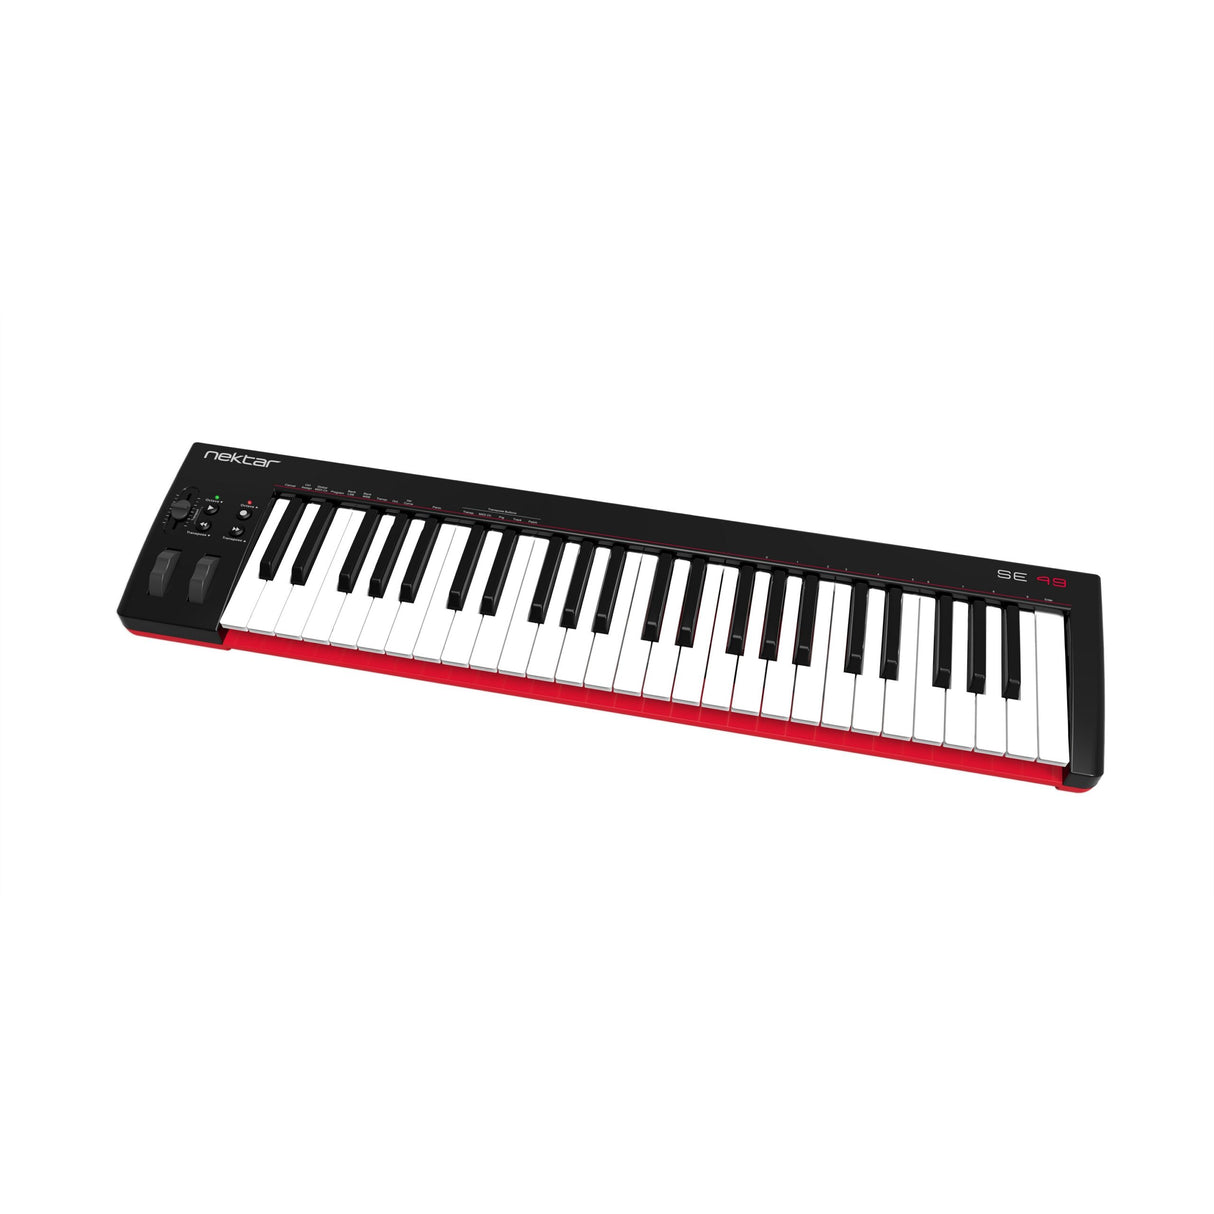 Nektar SE49 49-Full Size Keys USB MIDI Controller with DAW Integration